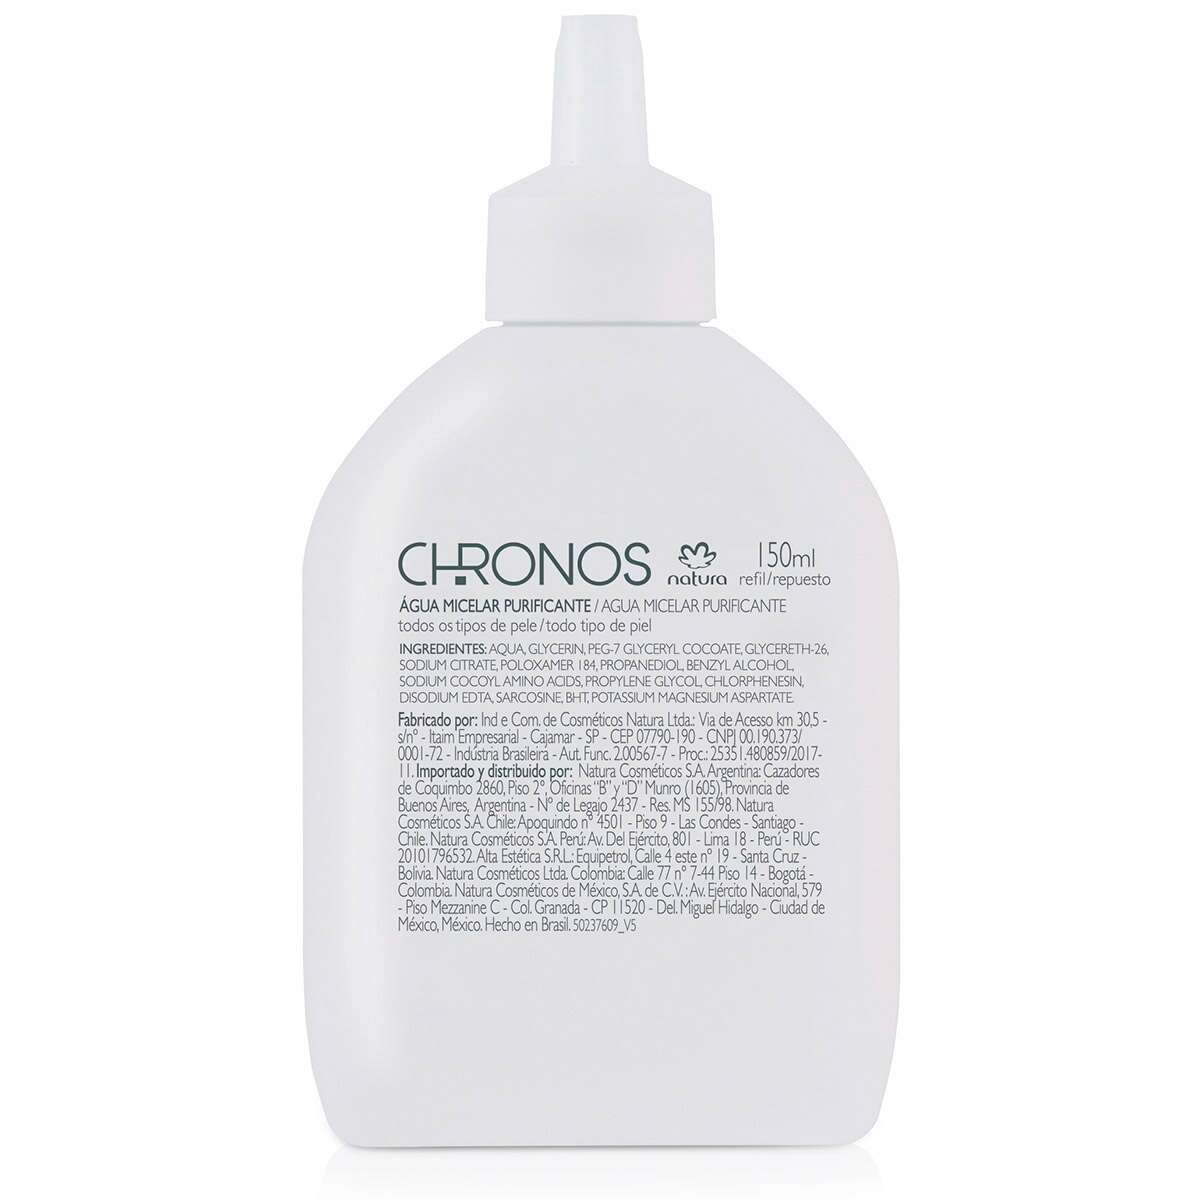 Repuesto Agua Micelar Purificante Chronos 150ml